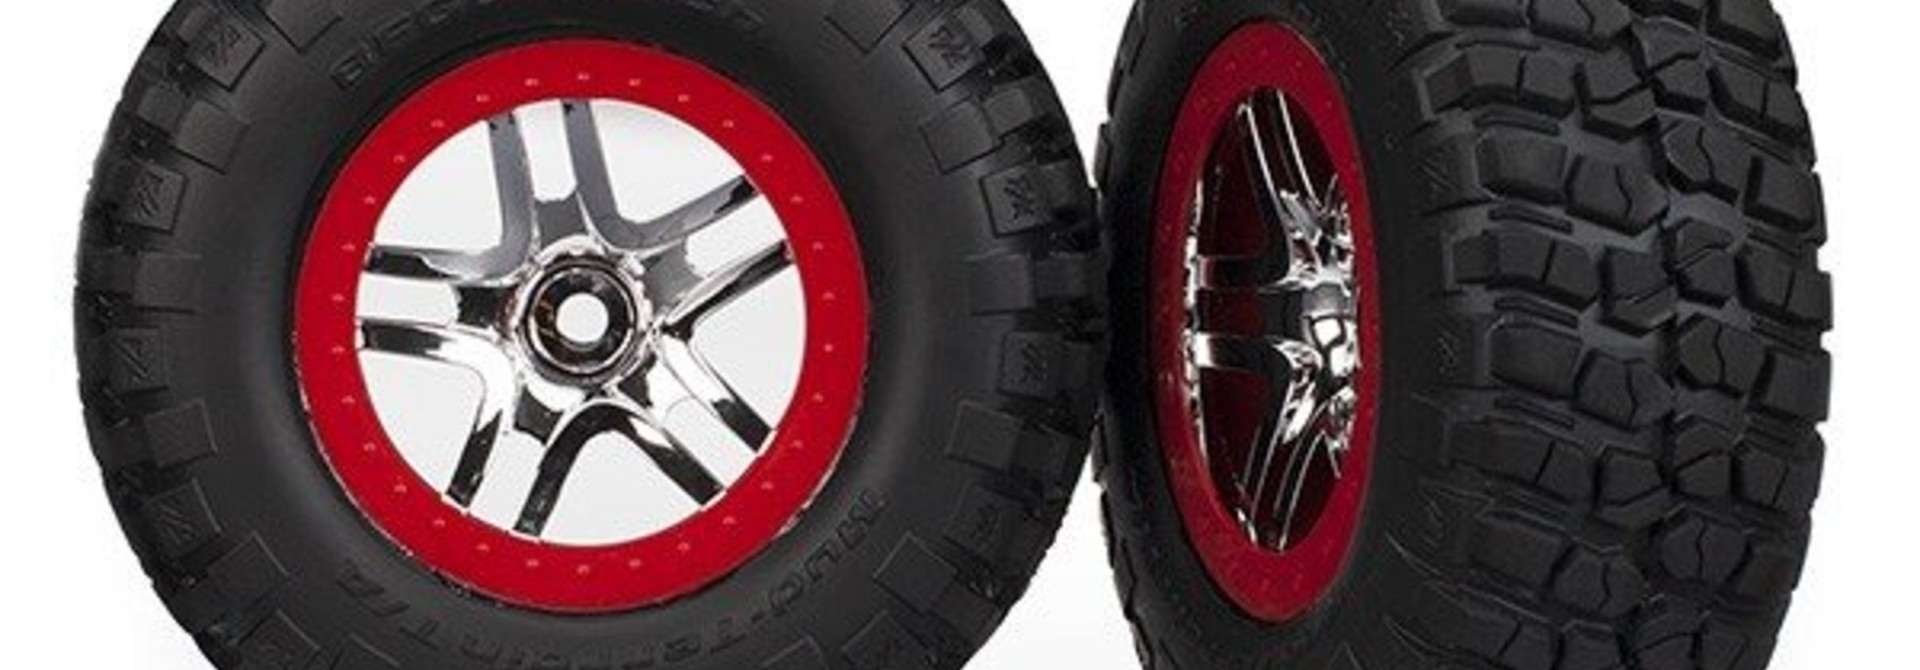 Tire & wheel assy, glued (S1 compound) (SCT SS, chrome red b, TRX6873R